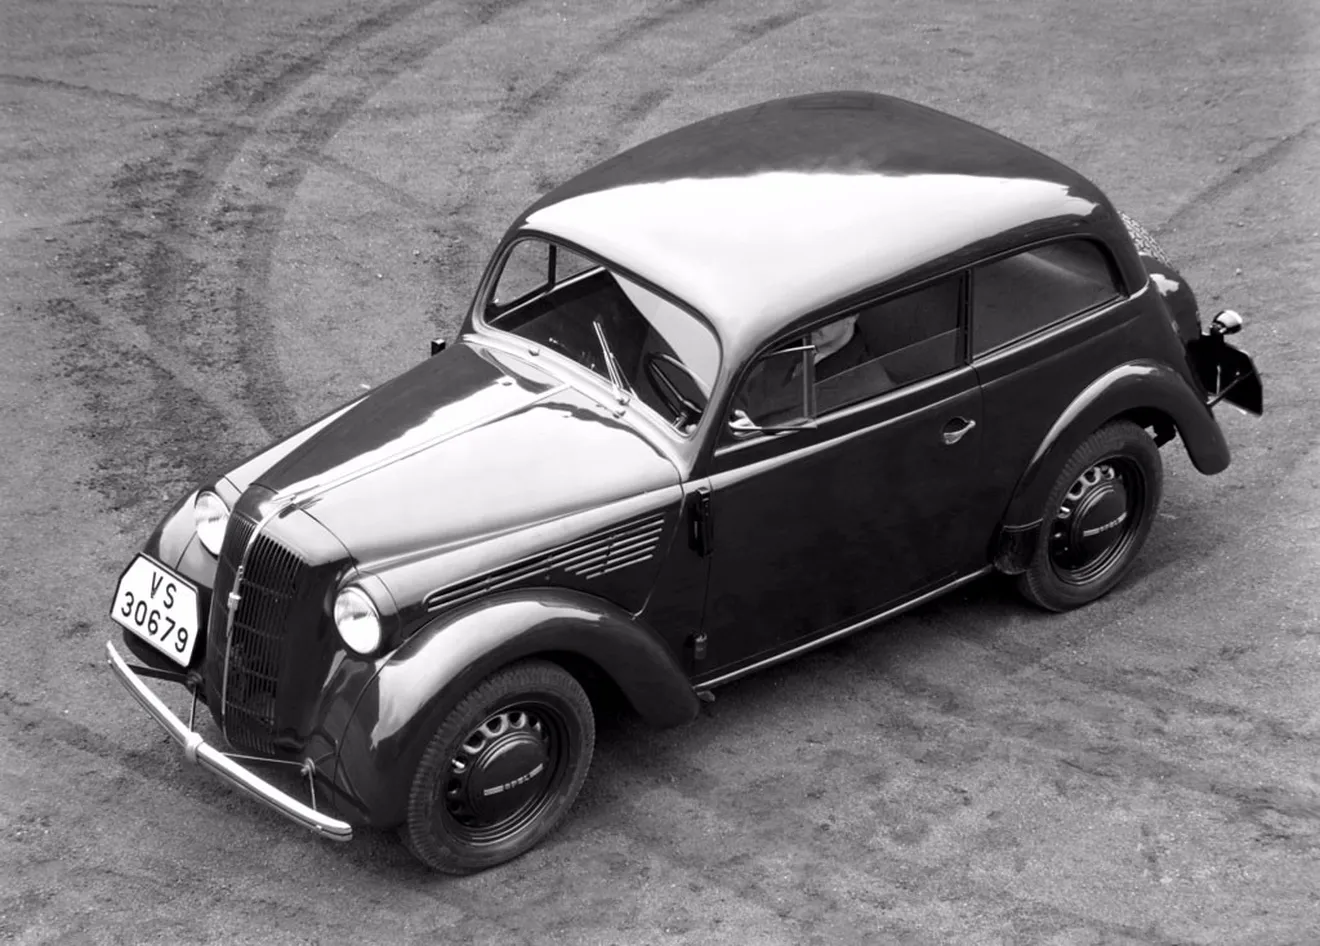 Breve historia del Opel Astra